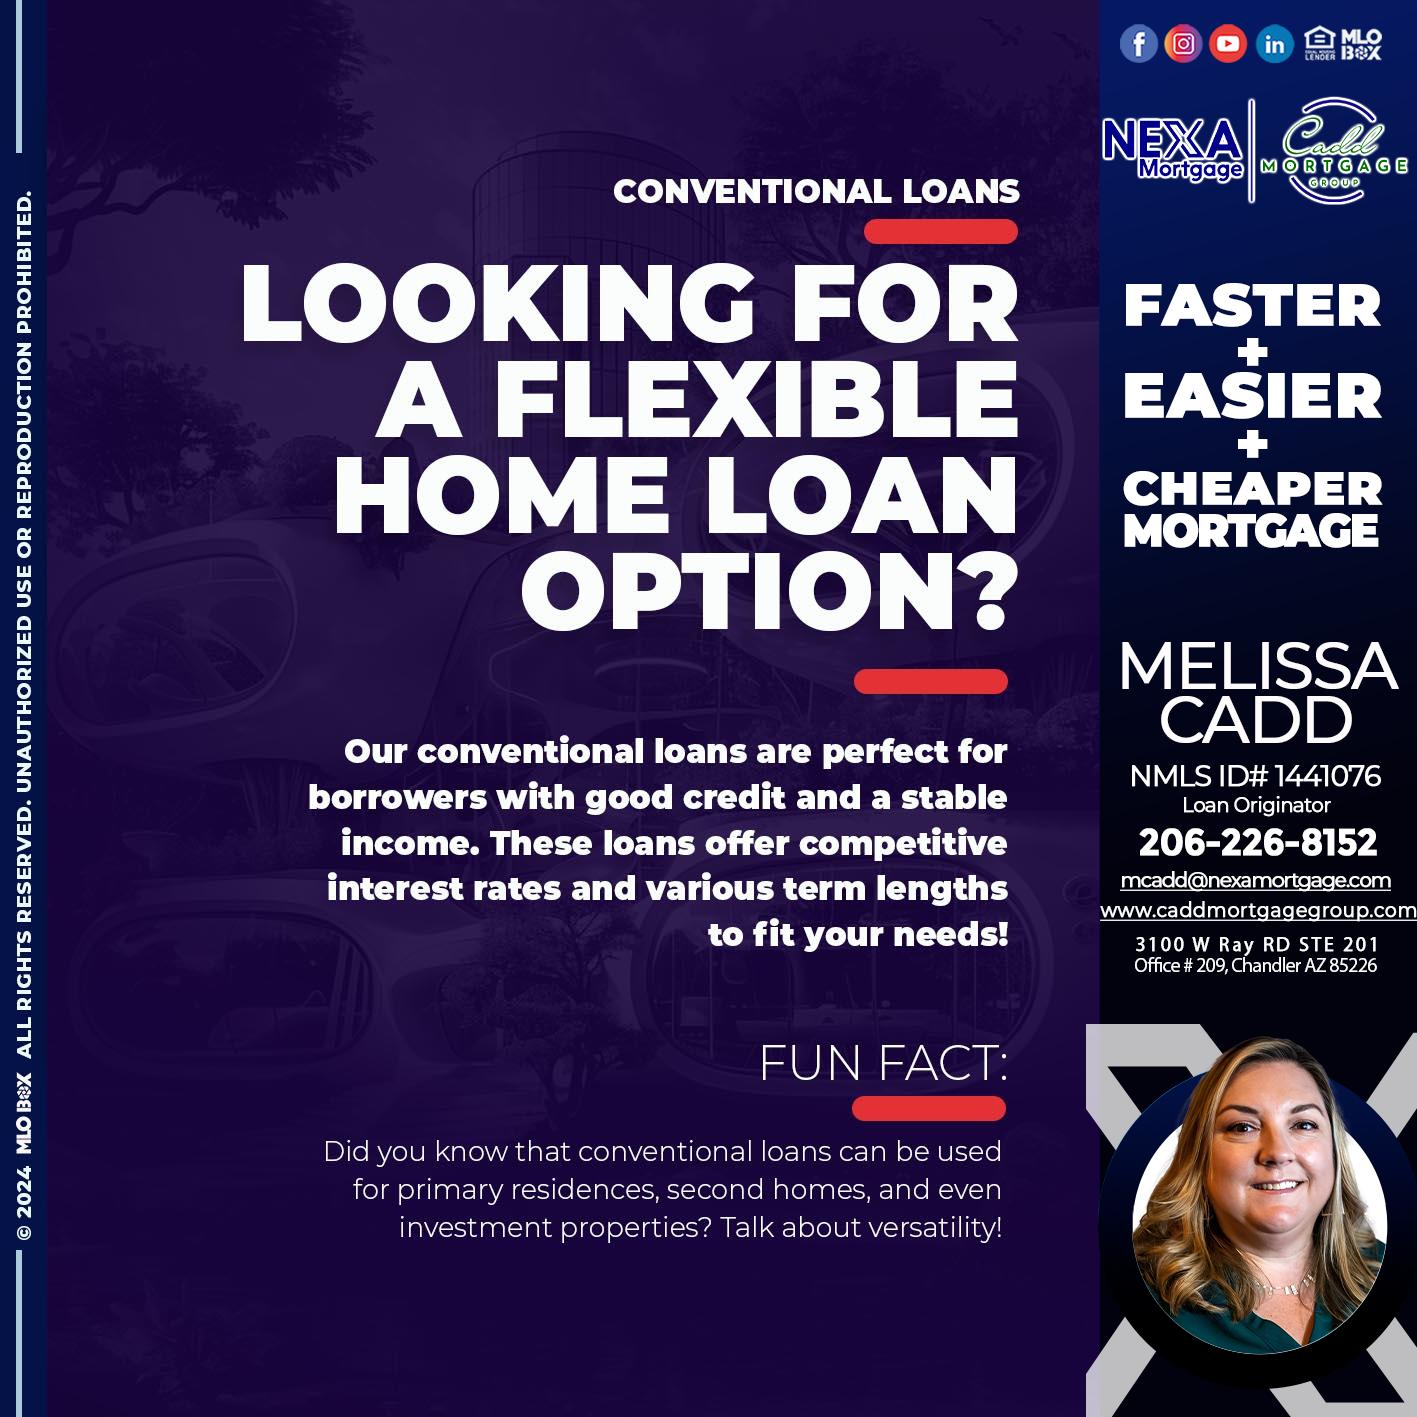 LOAN - Melissa Cadd -Loan Originator